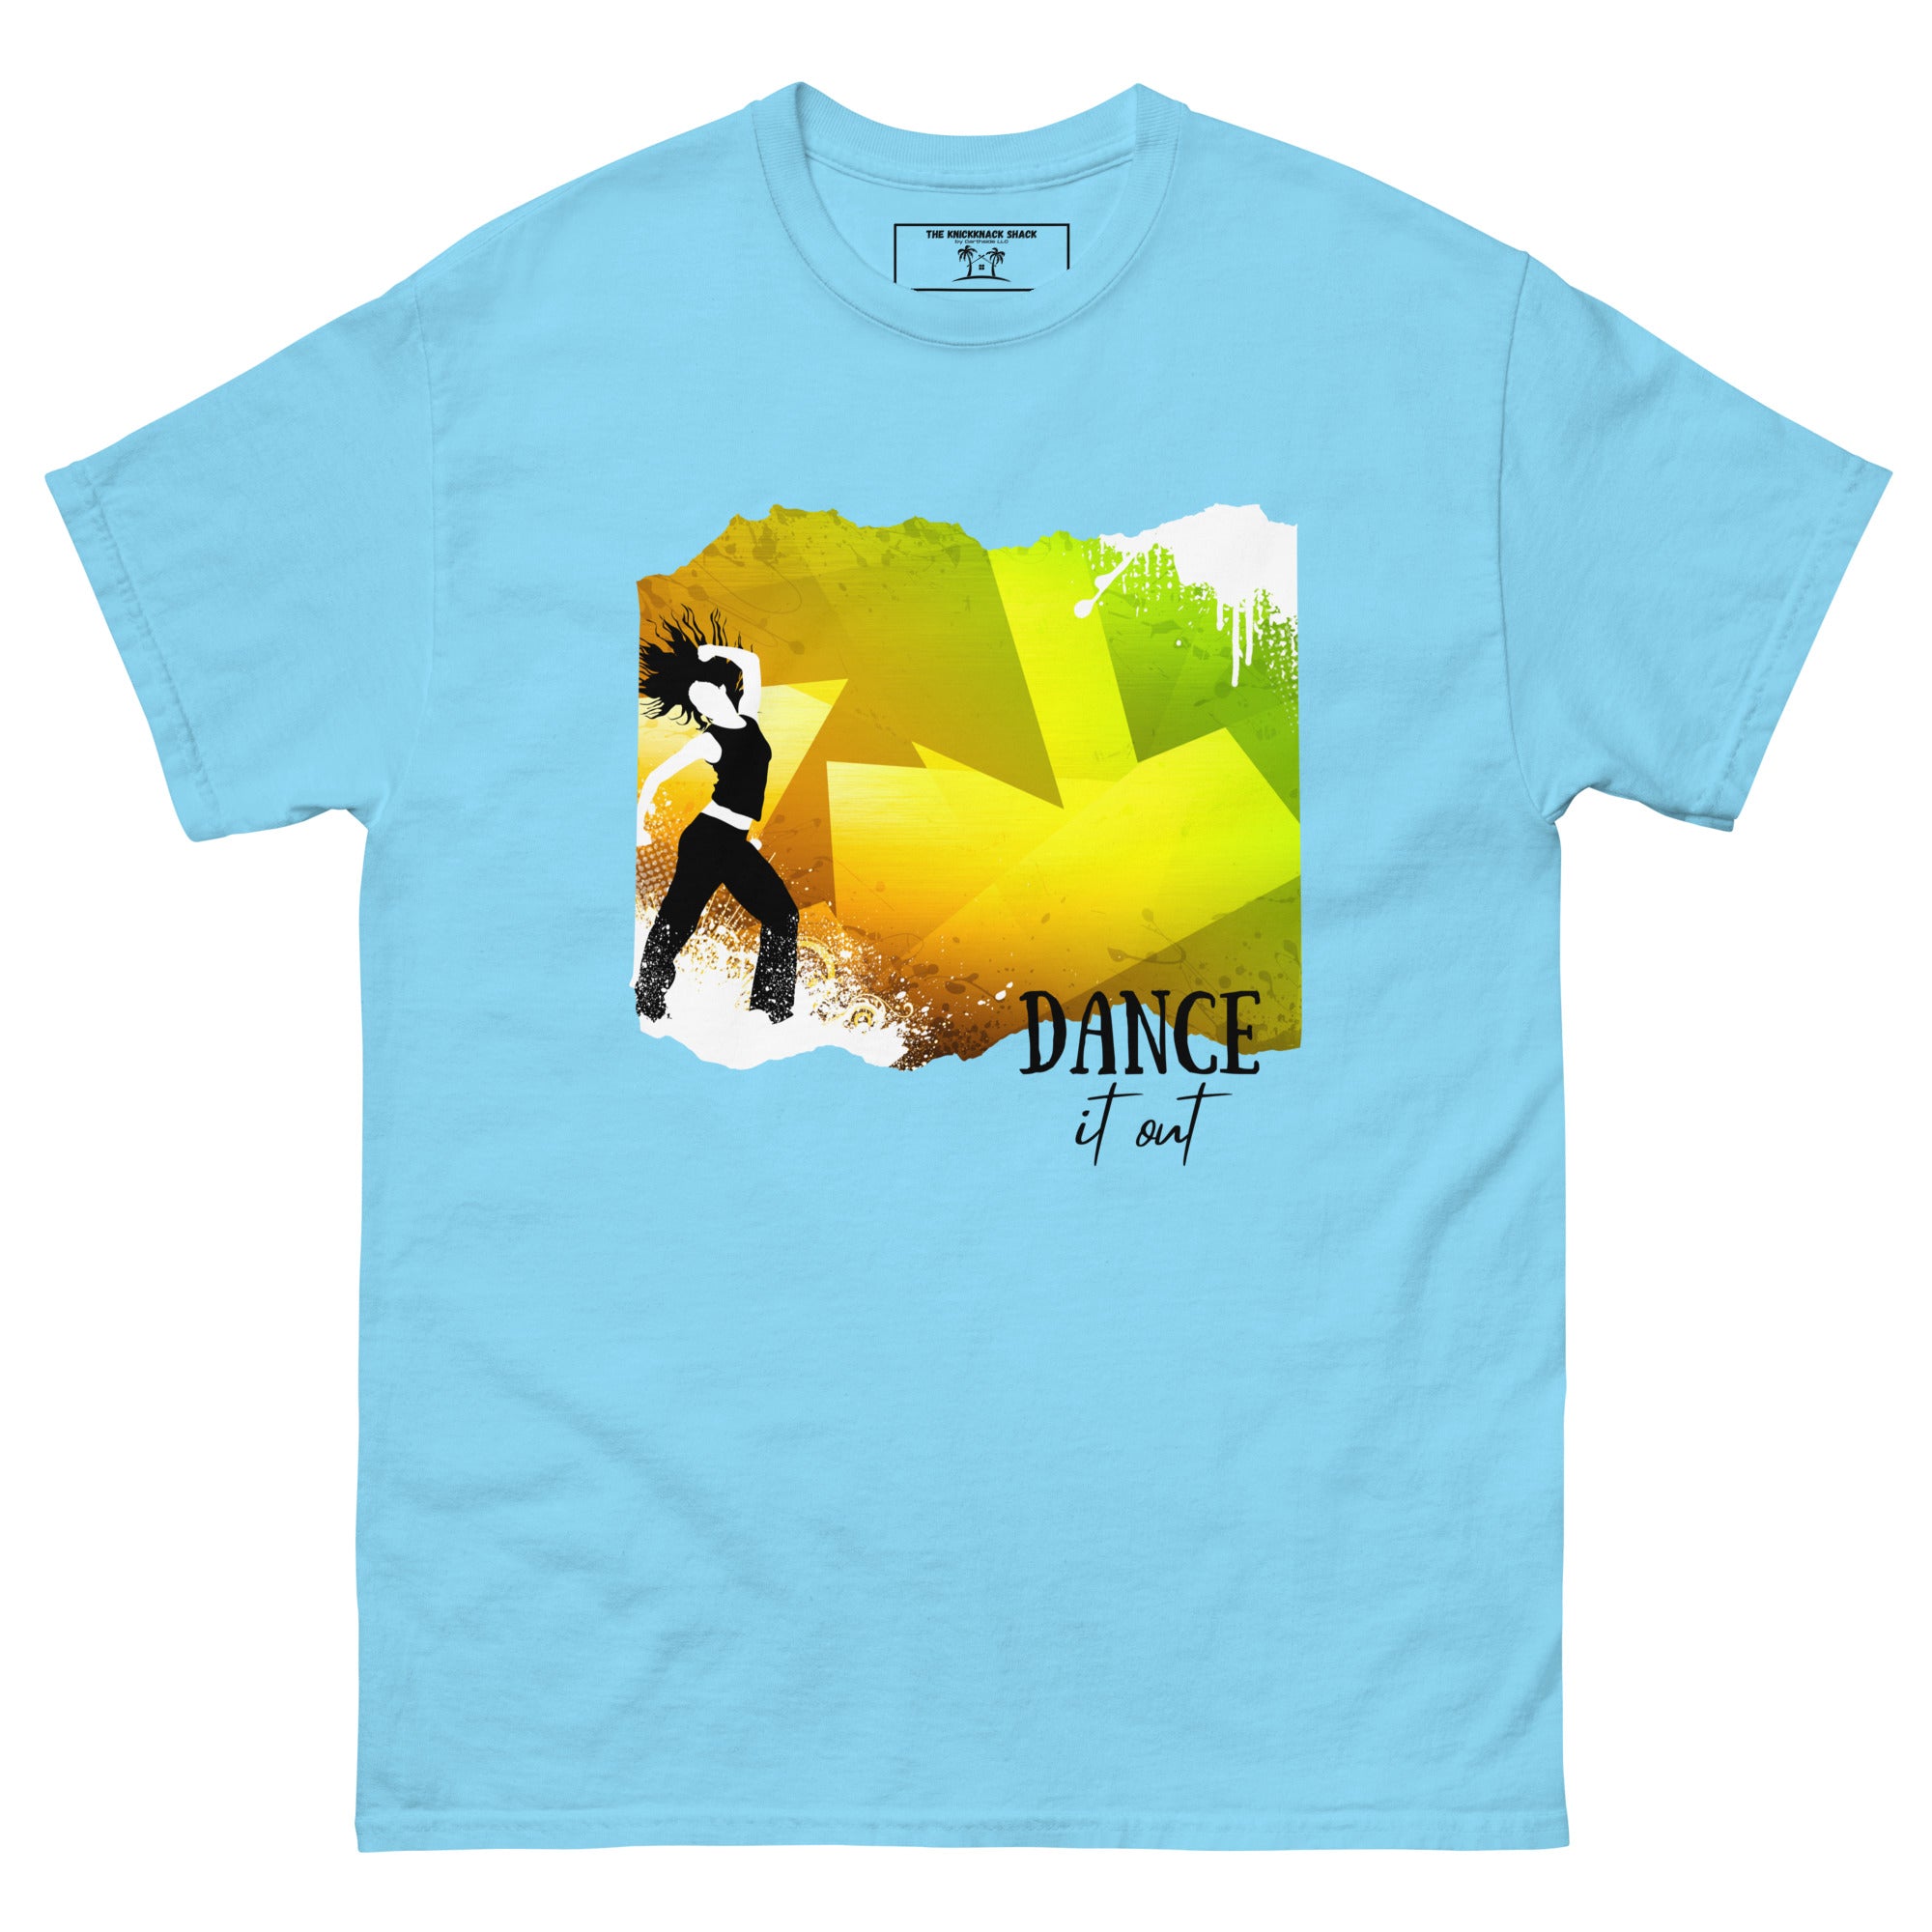 Camiseta clásica - Dance It Out (Estilo 1) (Colores claros)